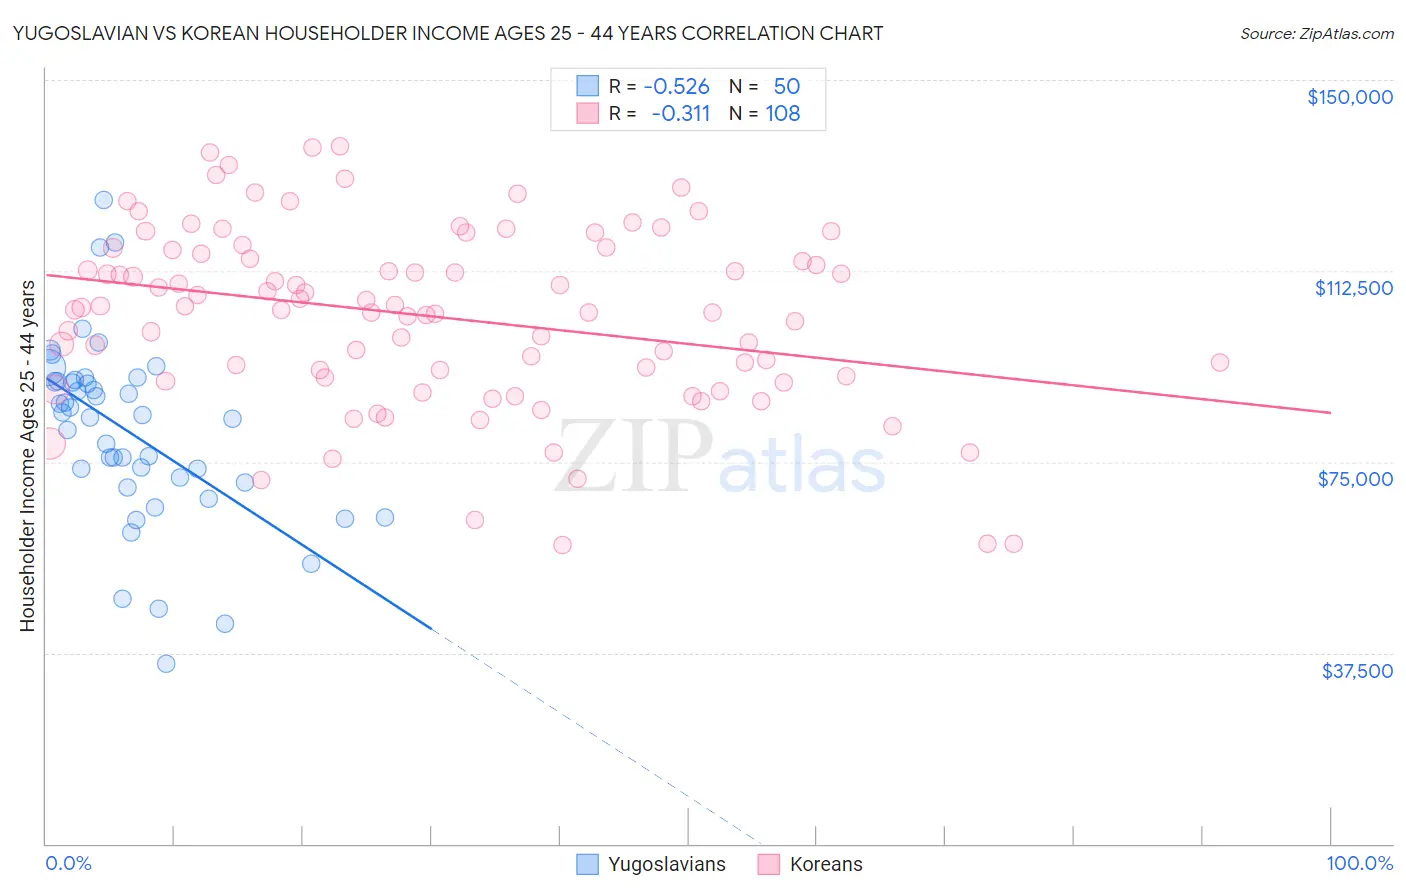 Yugoslavian vs Korean Householder Income Ages 25 - 44 years